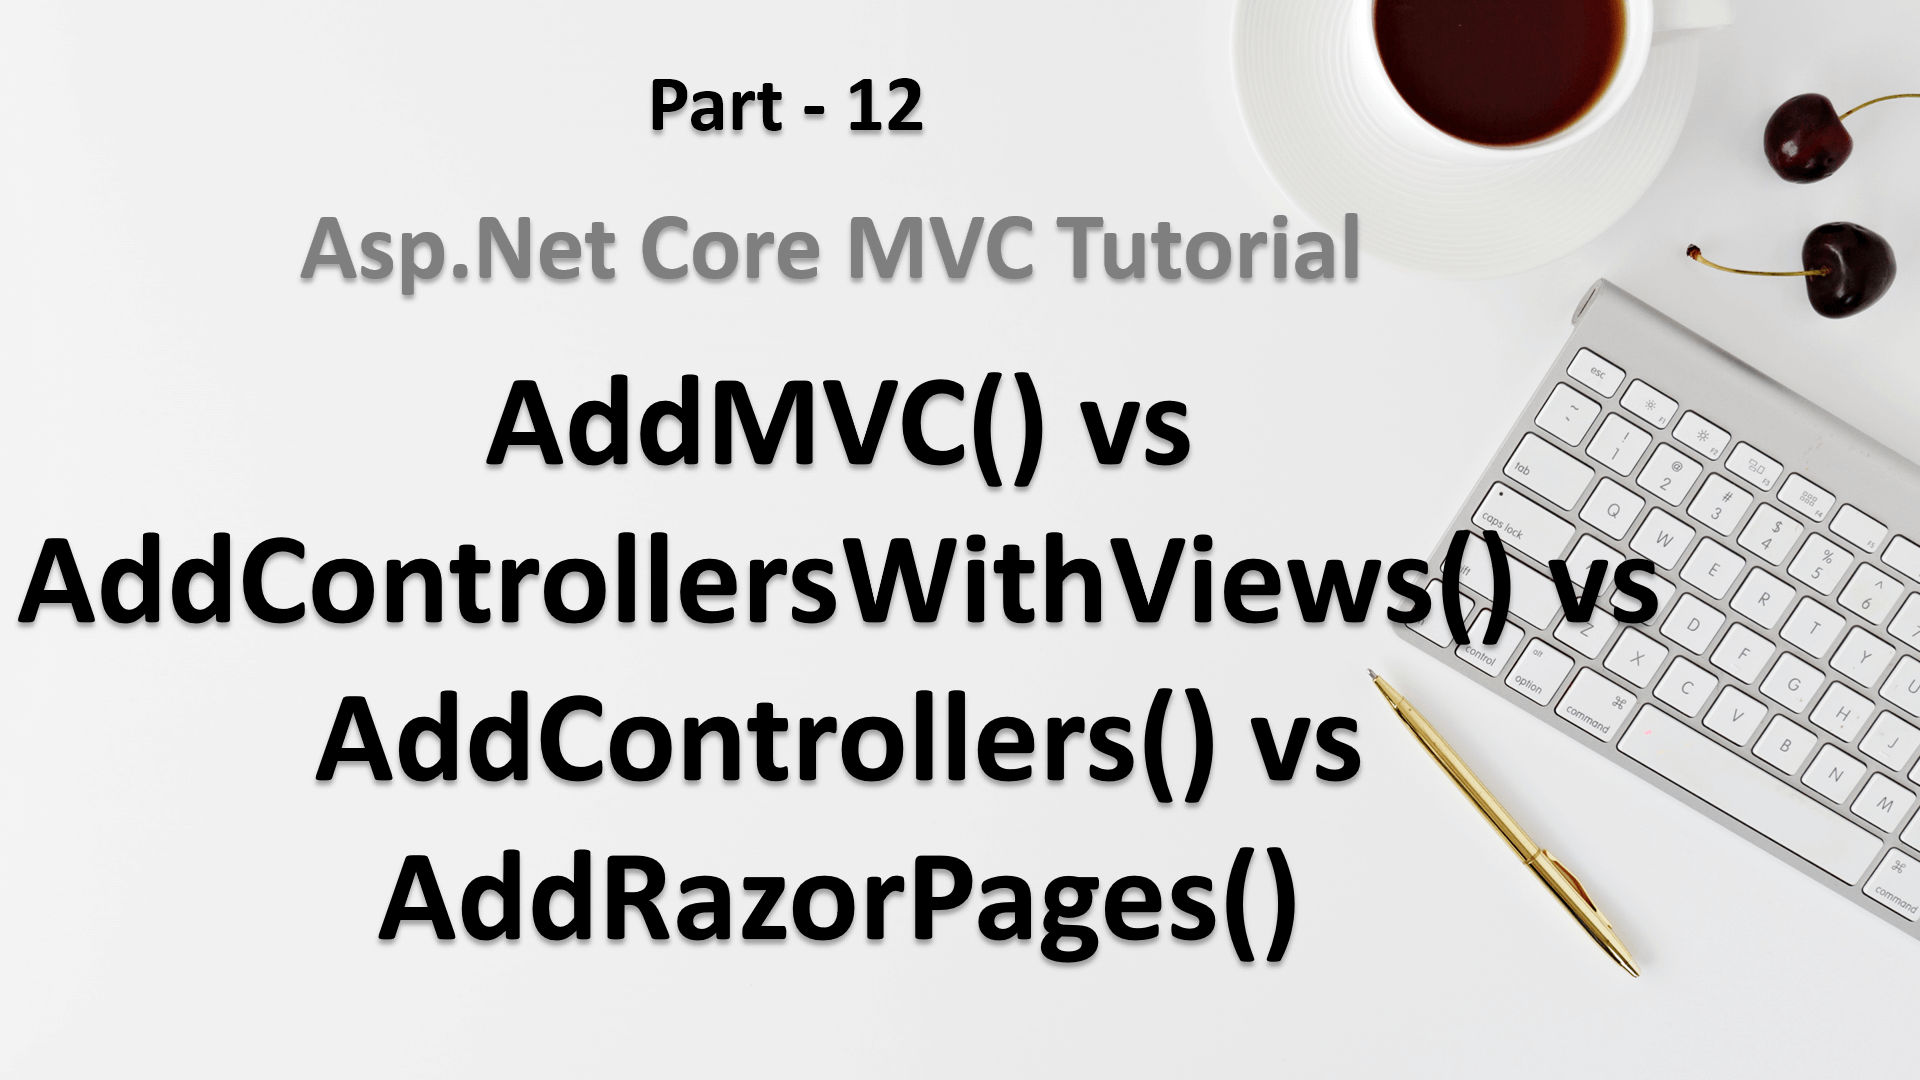 AddMVC() vs AddControllersWithViews() vs AddControllers() vs AddRazorPages() in Asp.Net Core